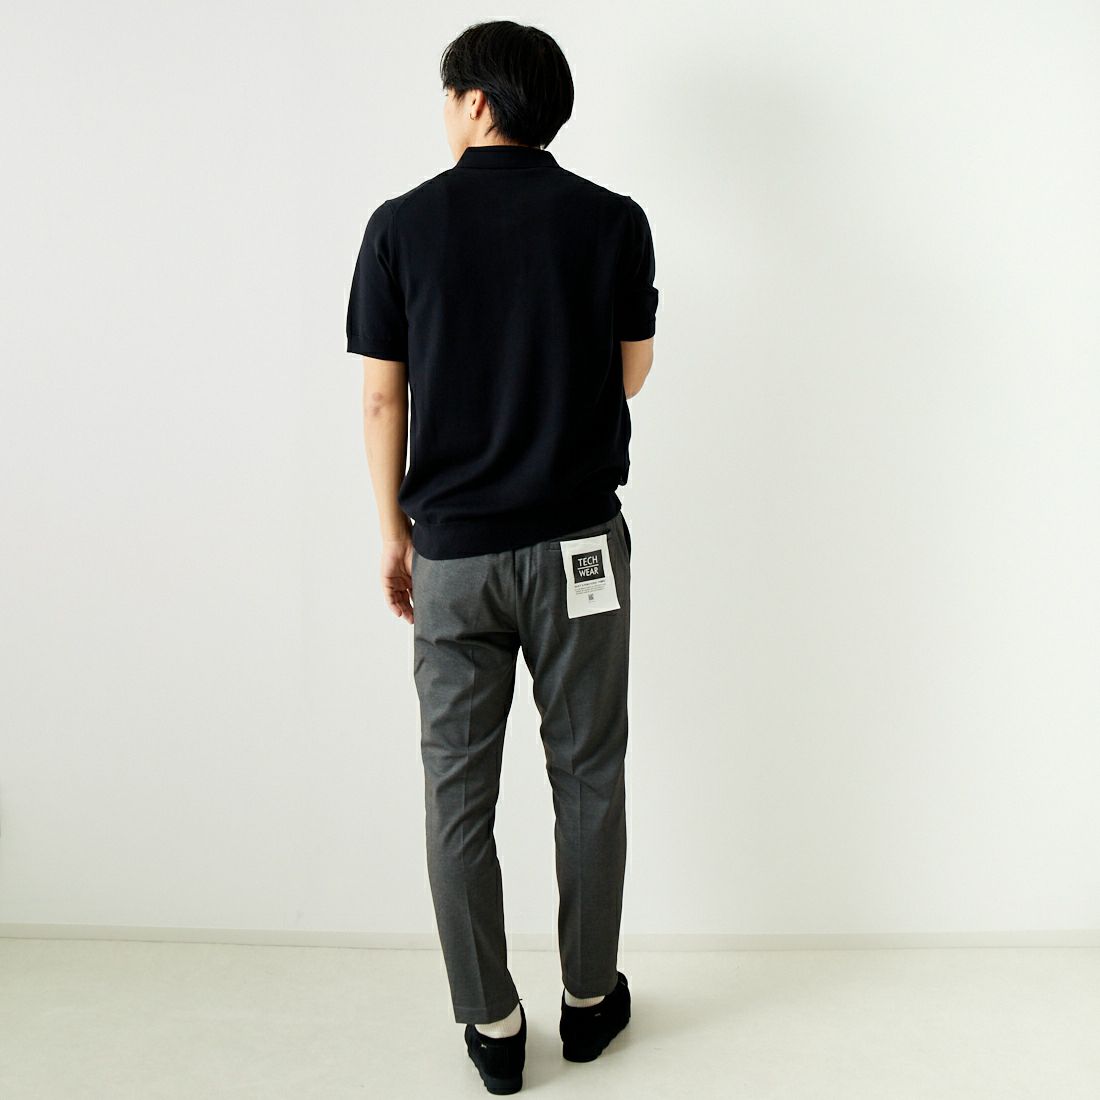 Jeans Factory Clothes [ジーンズファクトリークローズ] テックポンチ 1Pイージースラックス [JFC-242-017] 2 GRYﾒﾗﾝｼﾞ &&モデル身長：179cm 着用サイズ：M&&